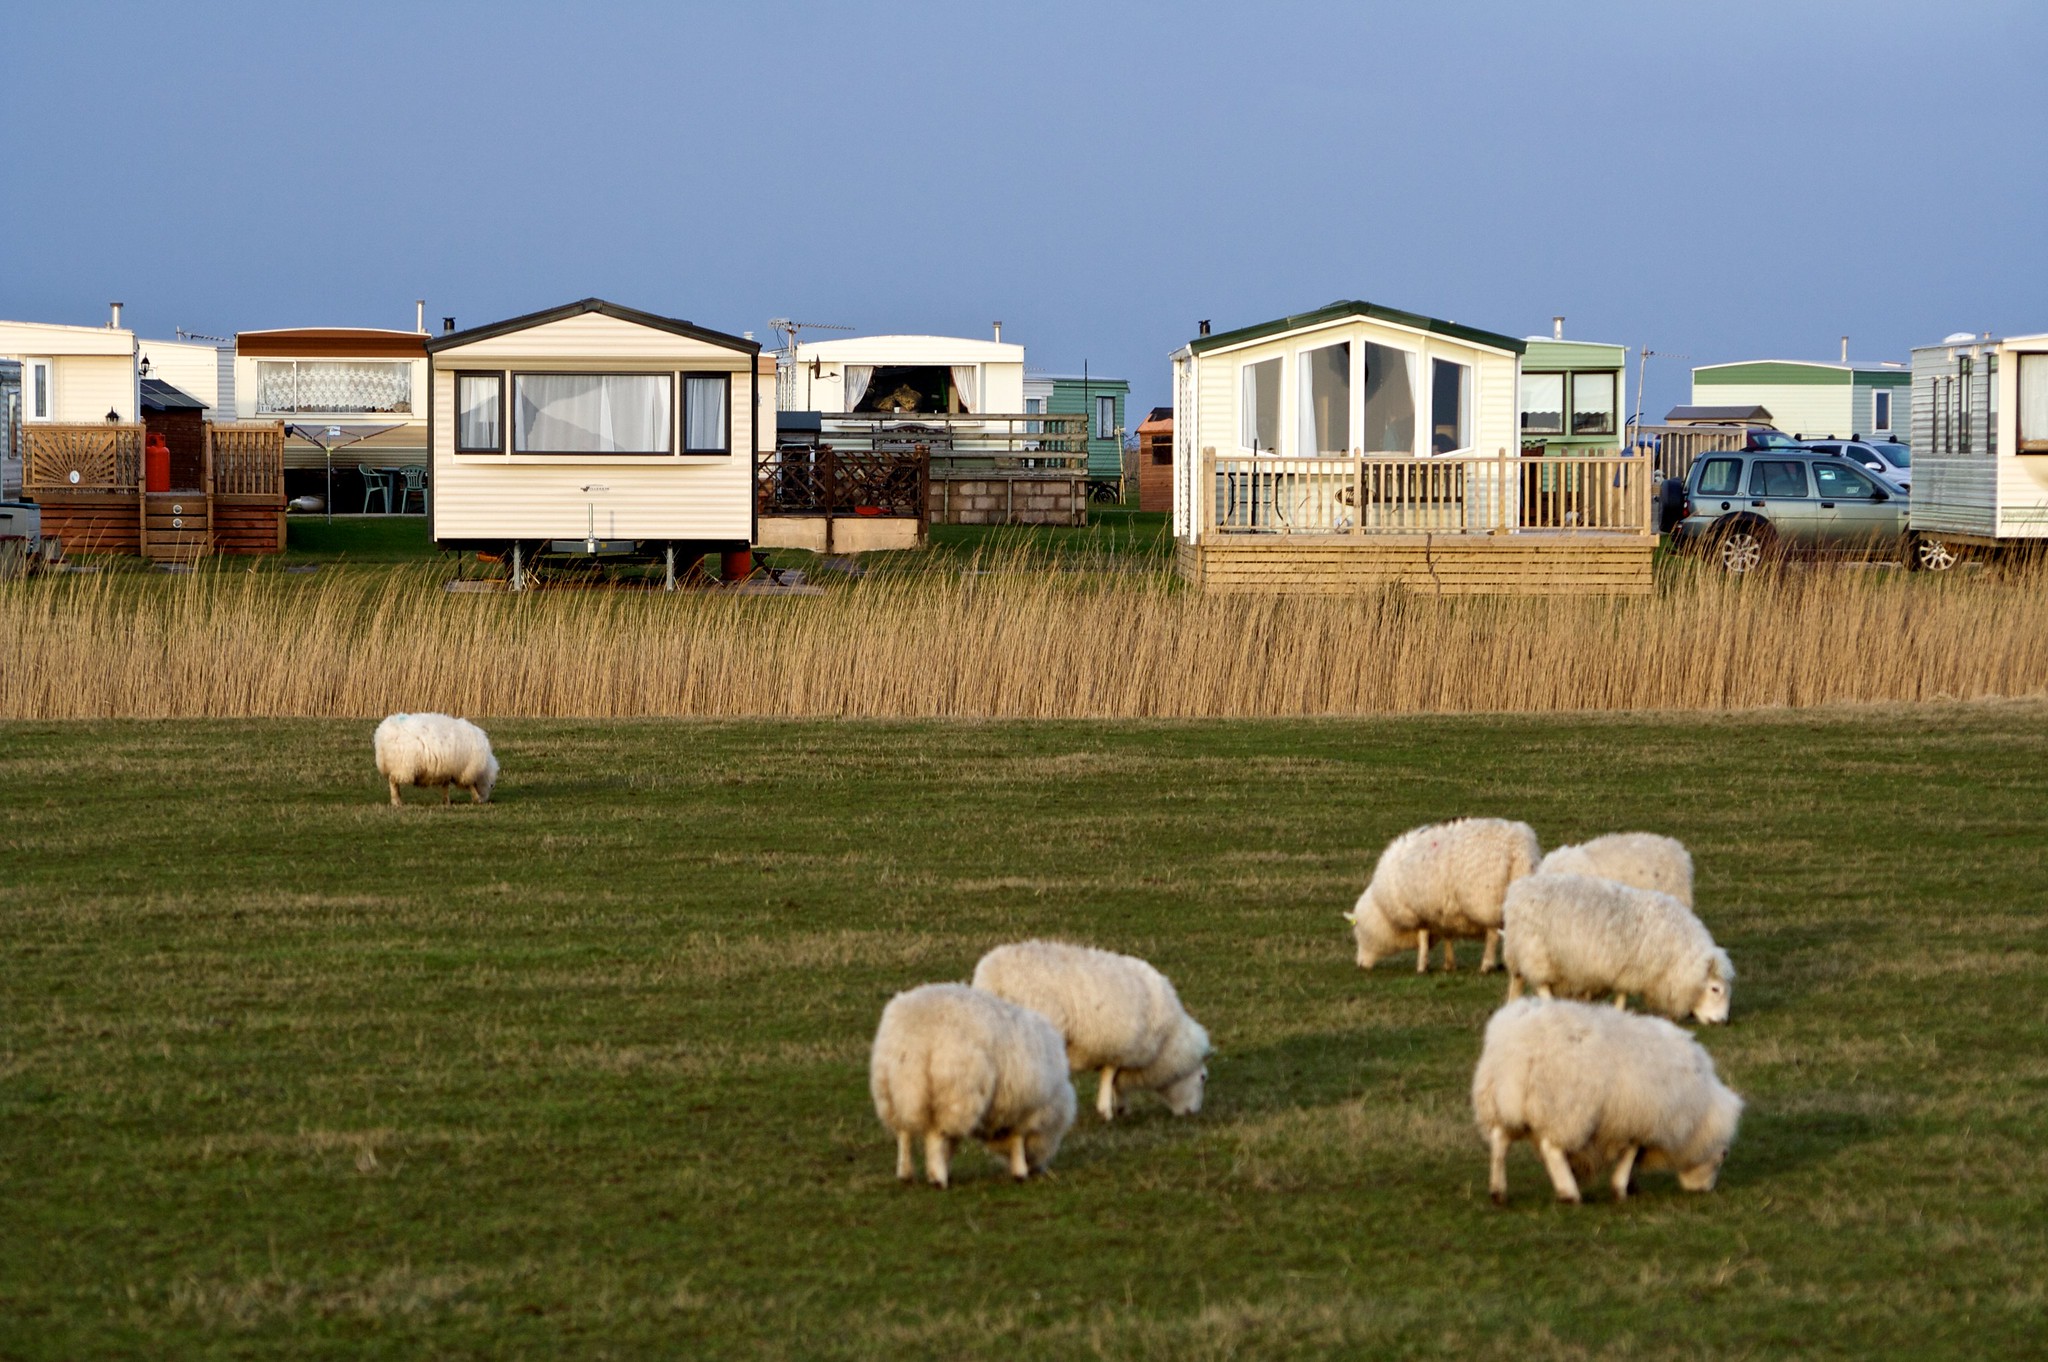 caravan park site next to field of sheep